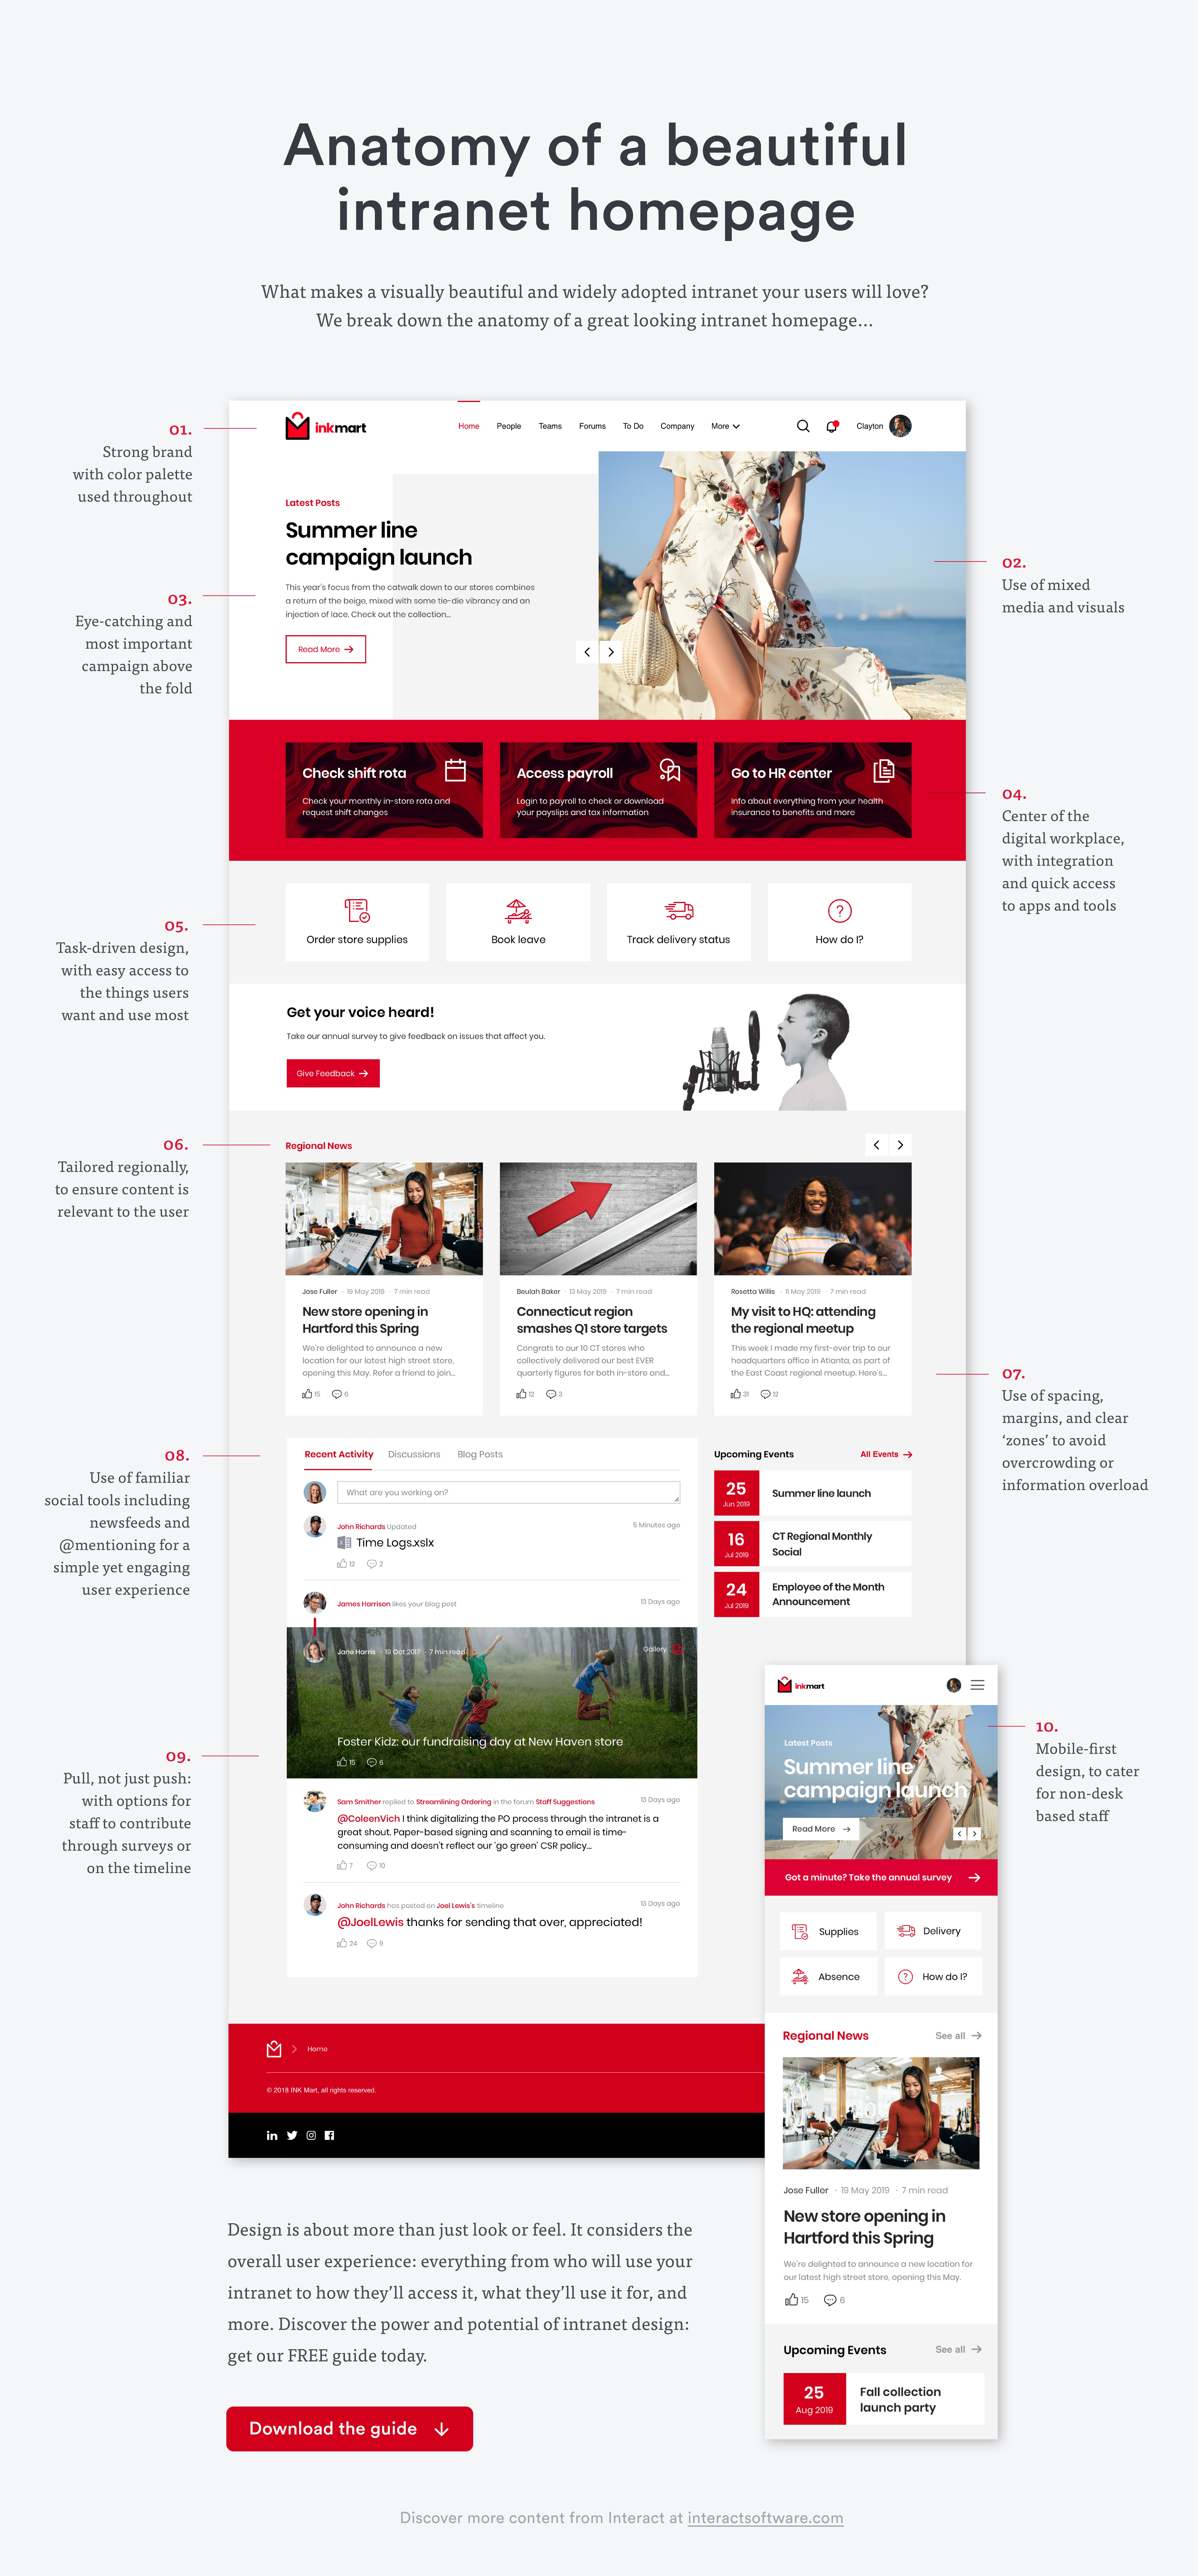 Best intranet homepage design ideas.